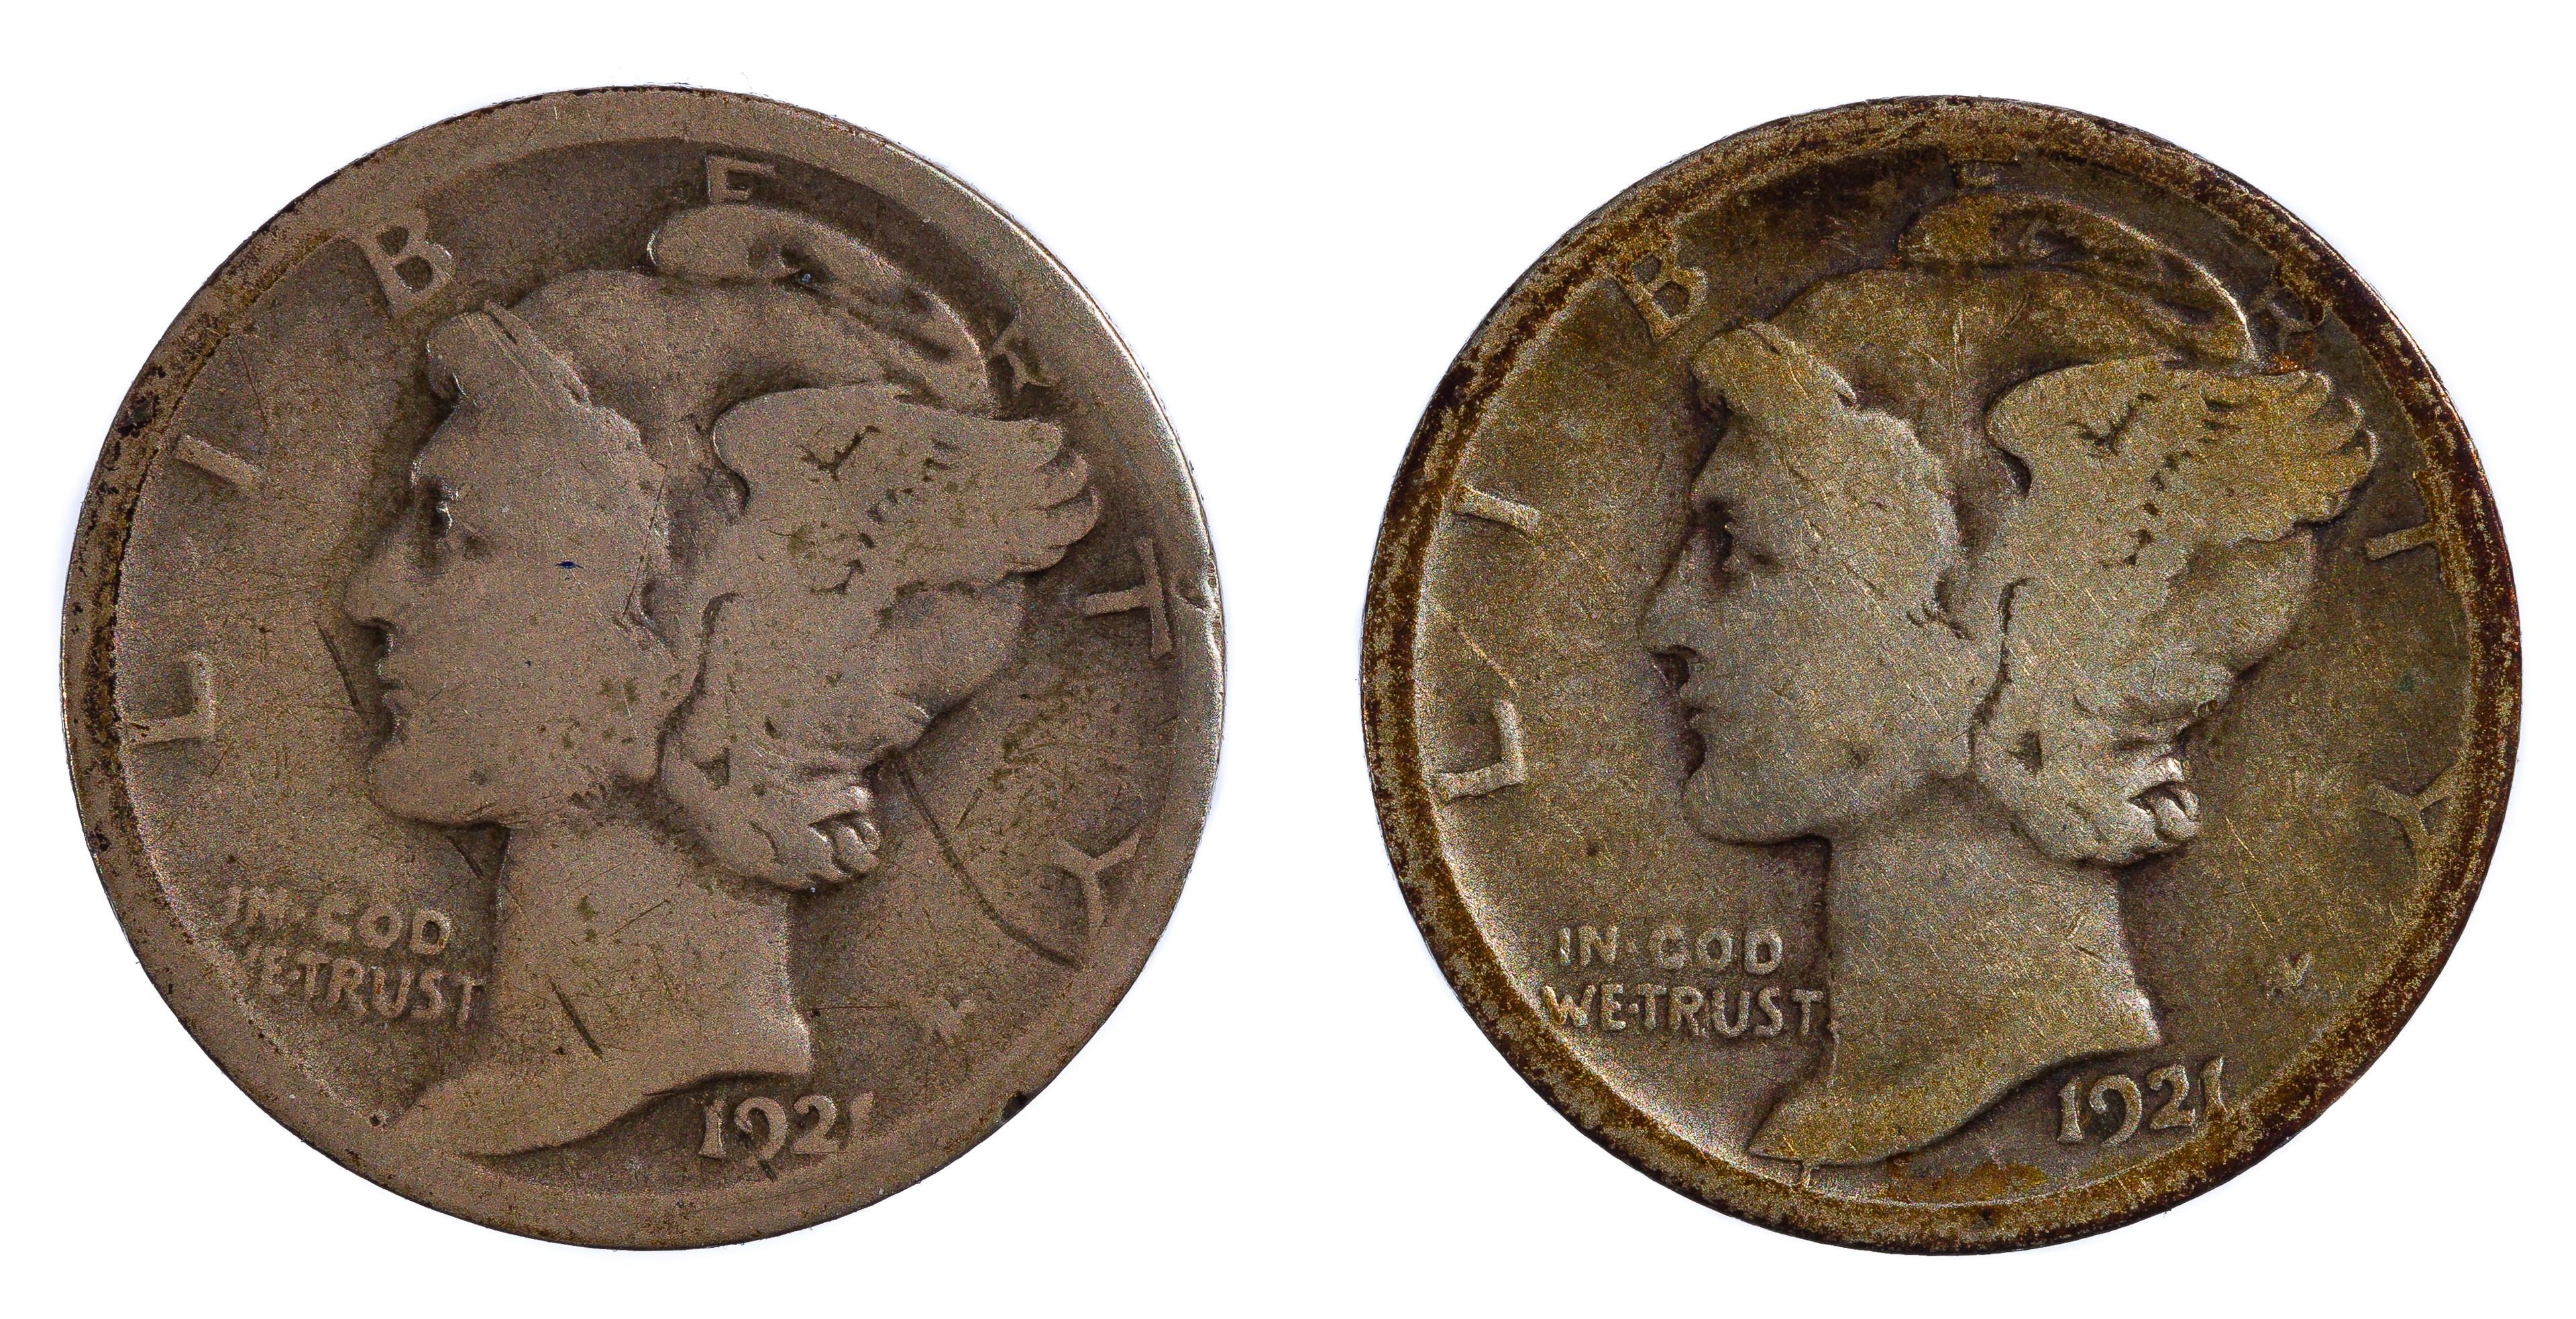 Washington Silver Quarter and Mercury Dime Assortment